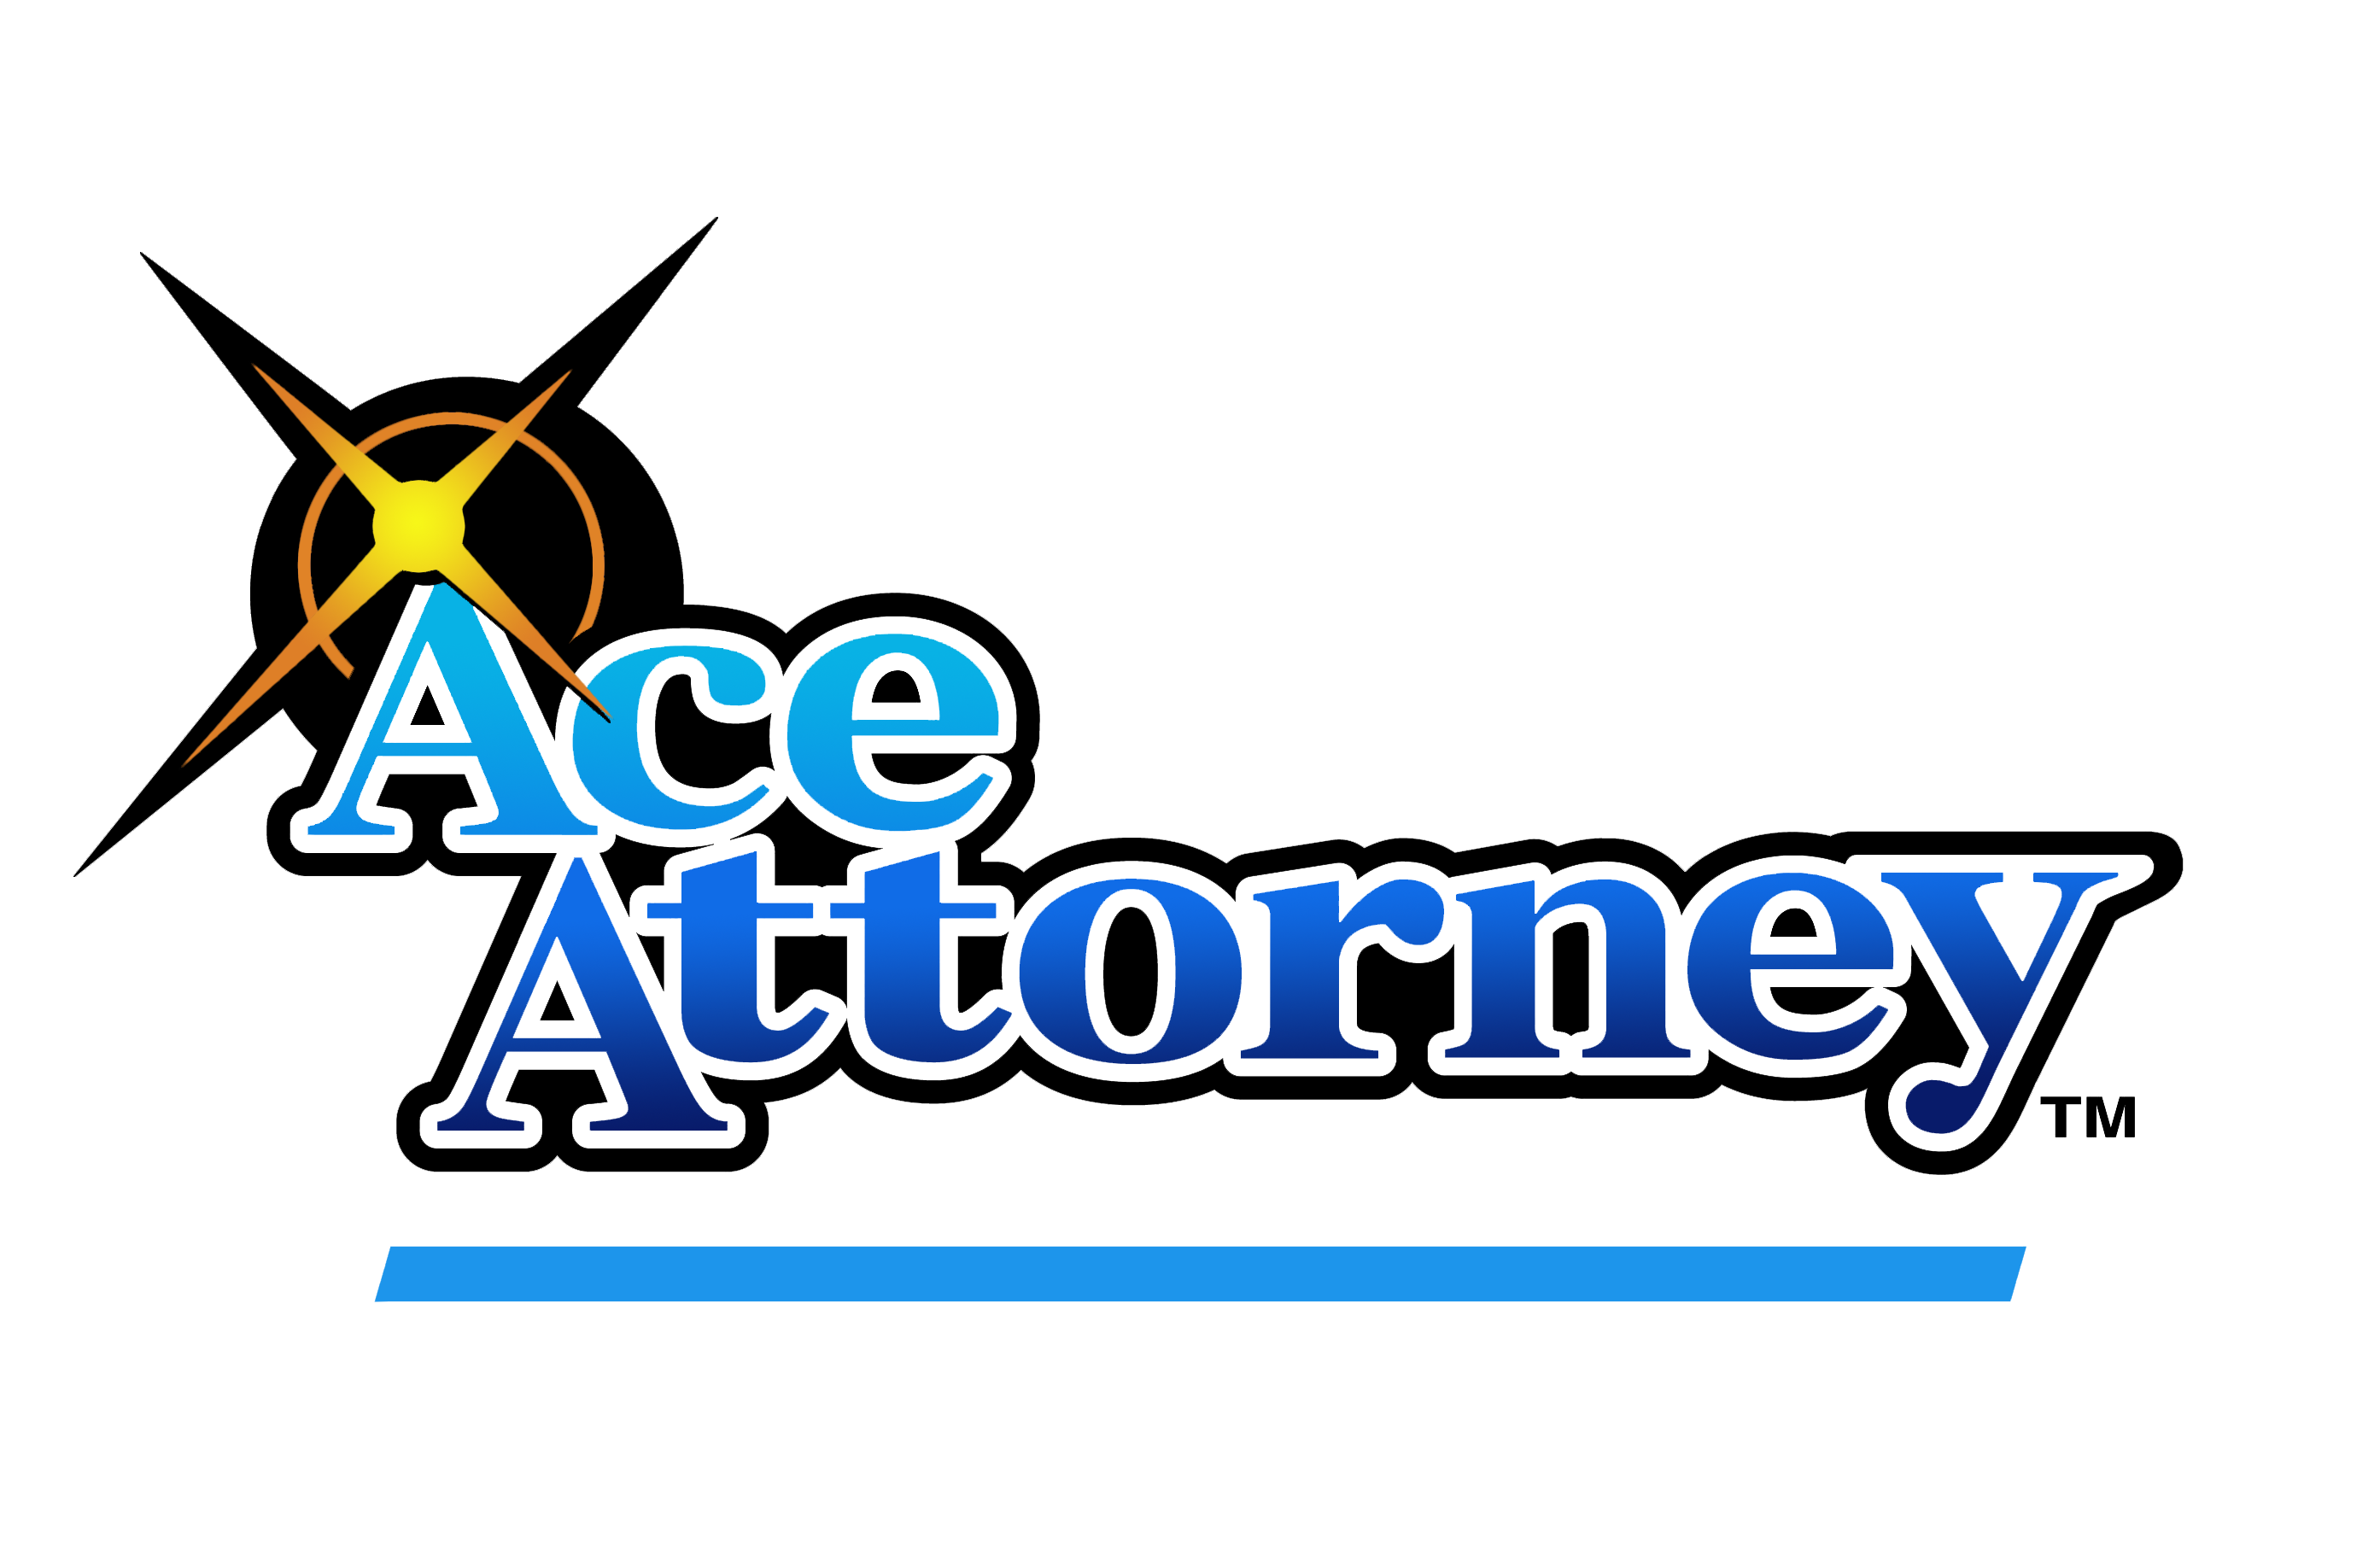 Ace Attorney-logo Transparante Afbeeldingen